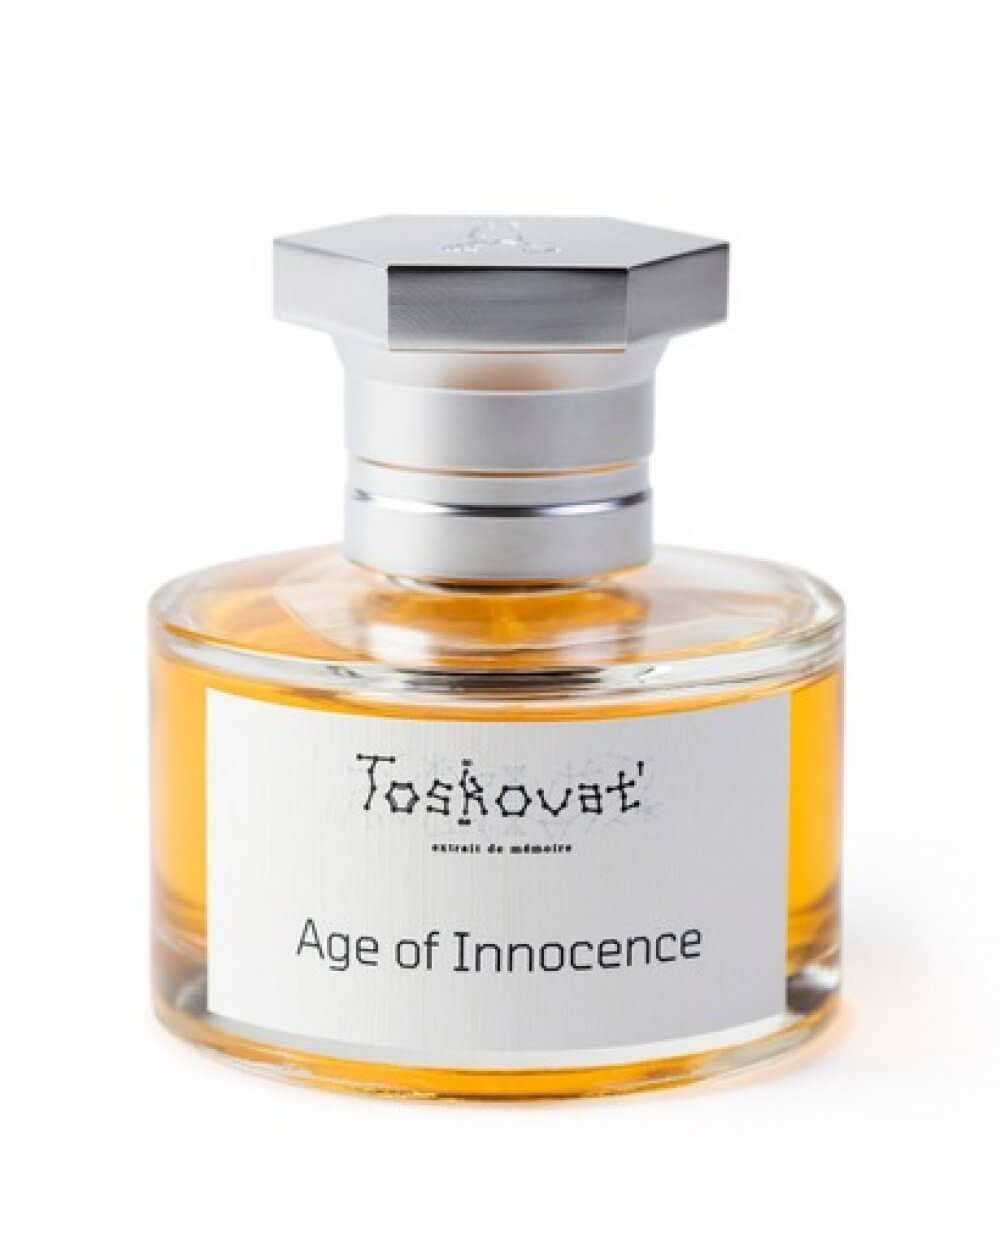 the age of innocence online subtitrat in romana Toskovat Age of Innocence 60 ML Extract de Parfum